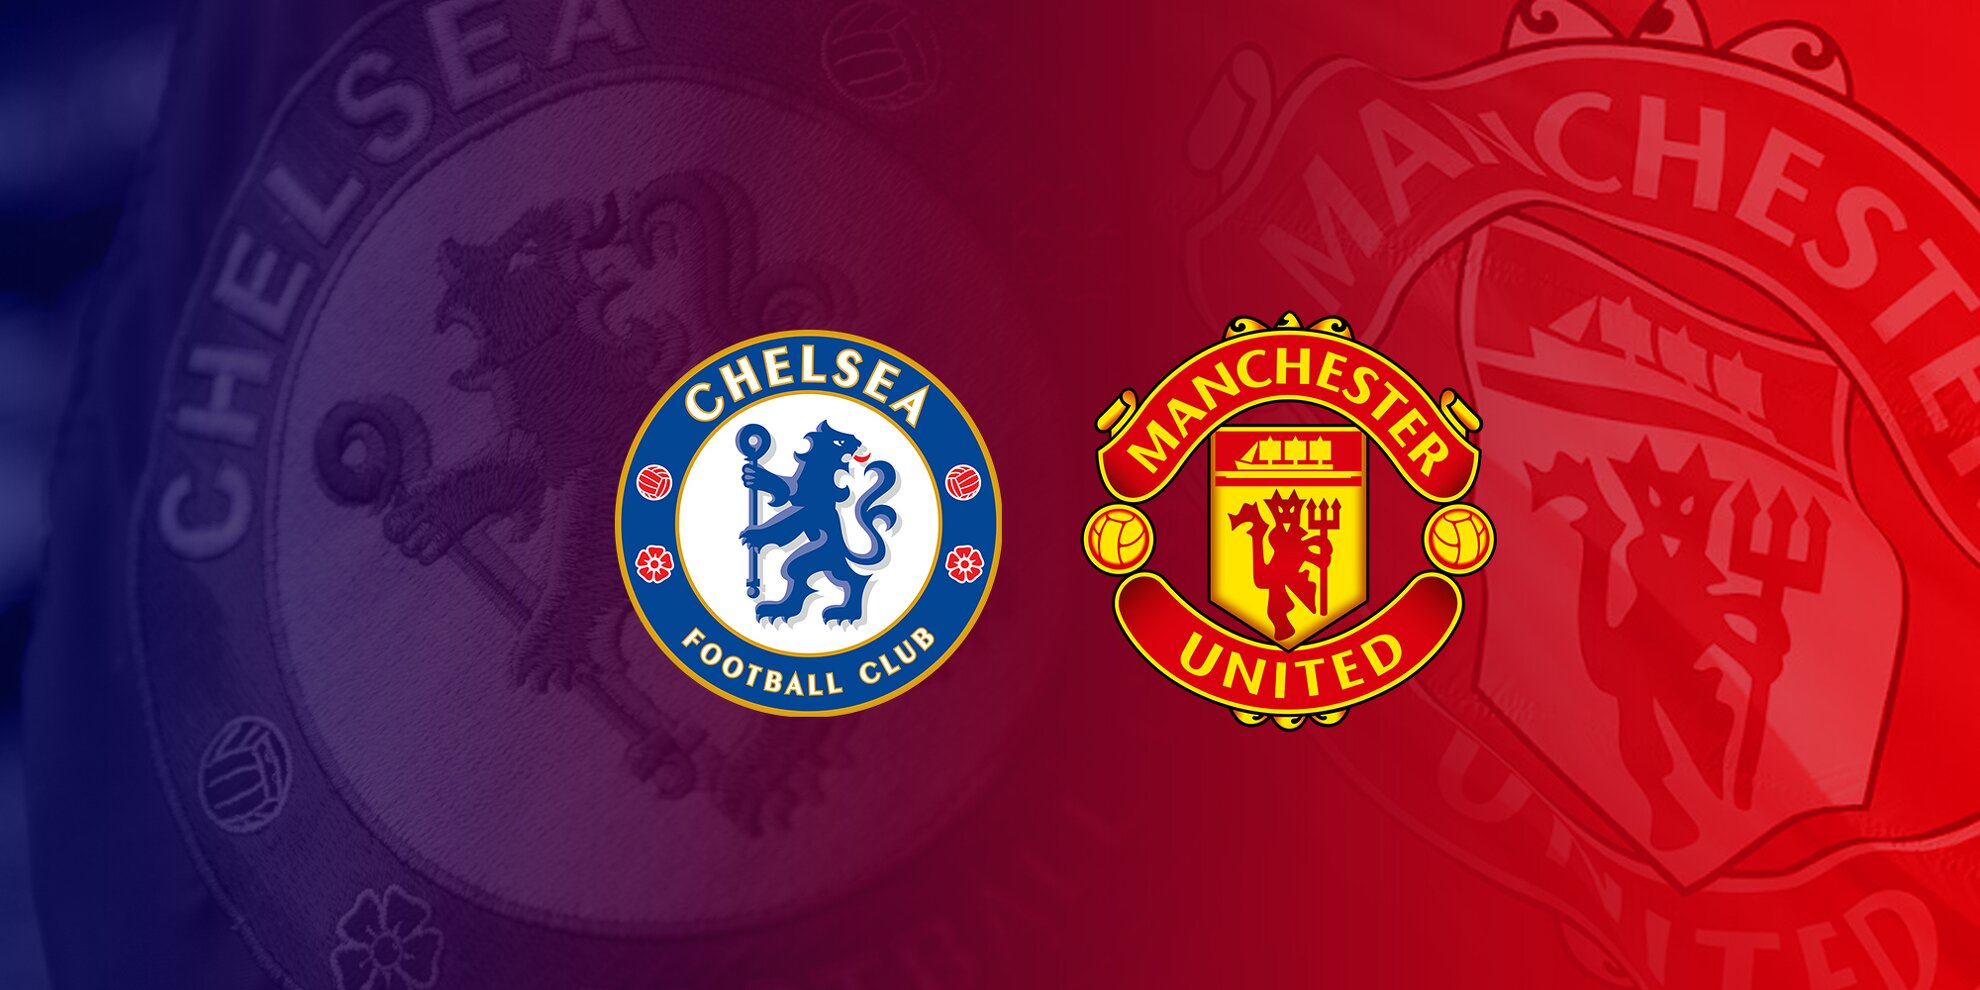 Chelsea vs Manchester United: Head-to-Head record